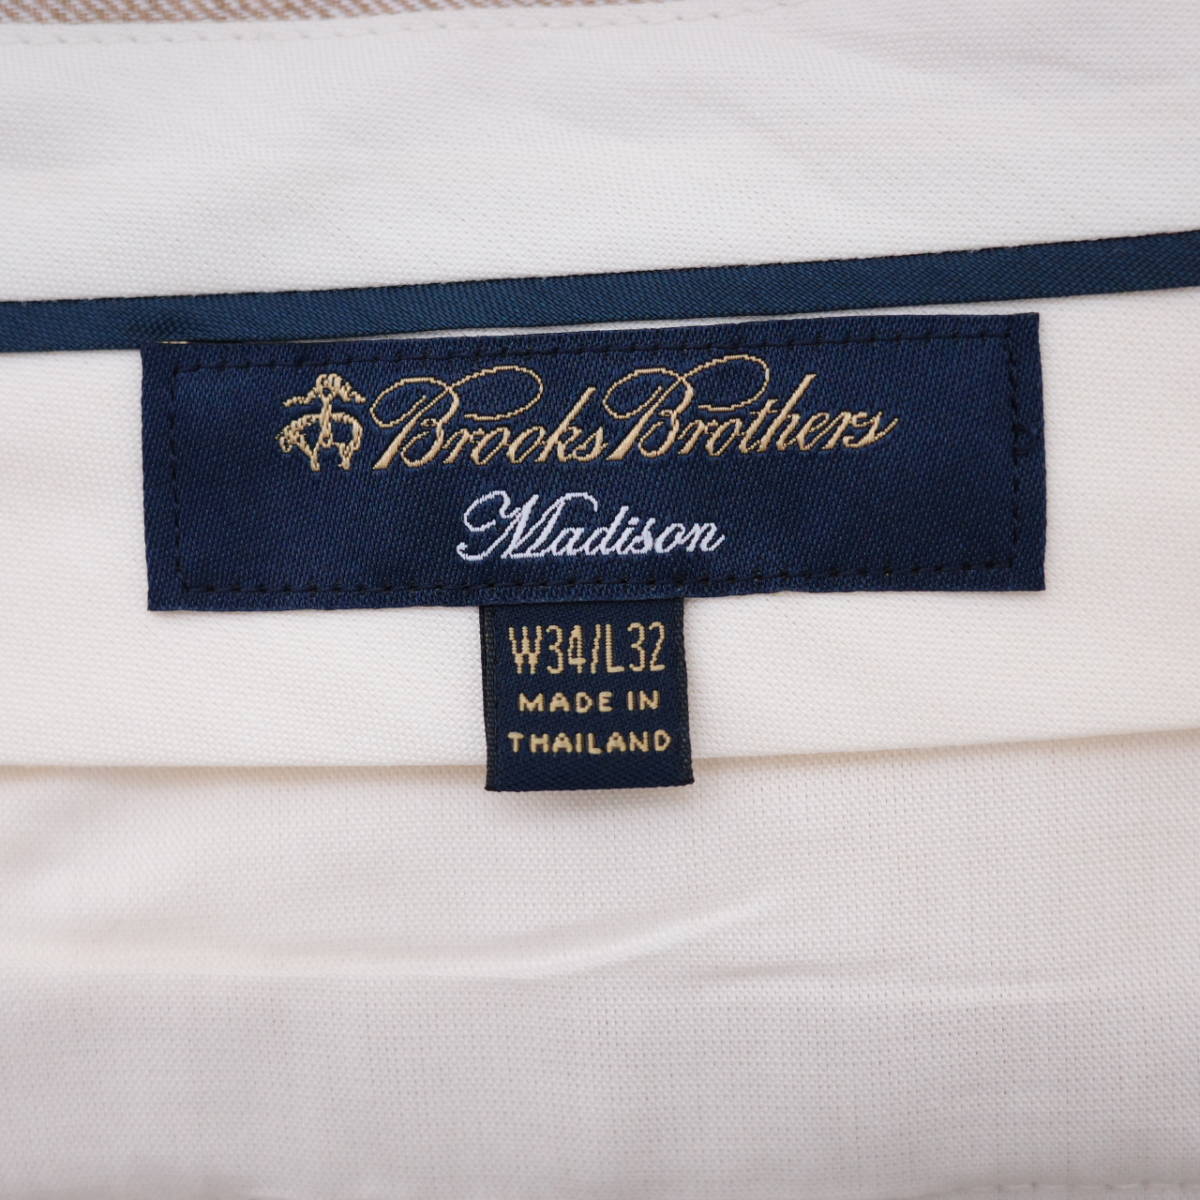  Brooks Brothers linen slacks W34L32 DEAD STOCK BROOKS BROTHERS Madison IRISH LINEN herringbone trousers